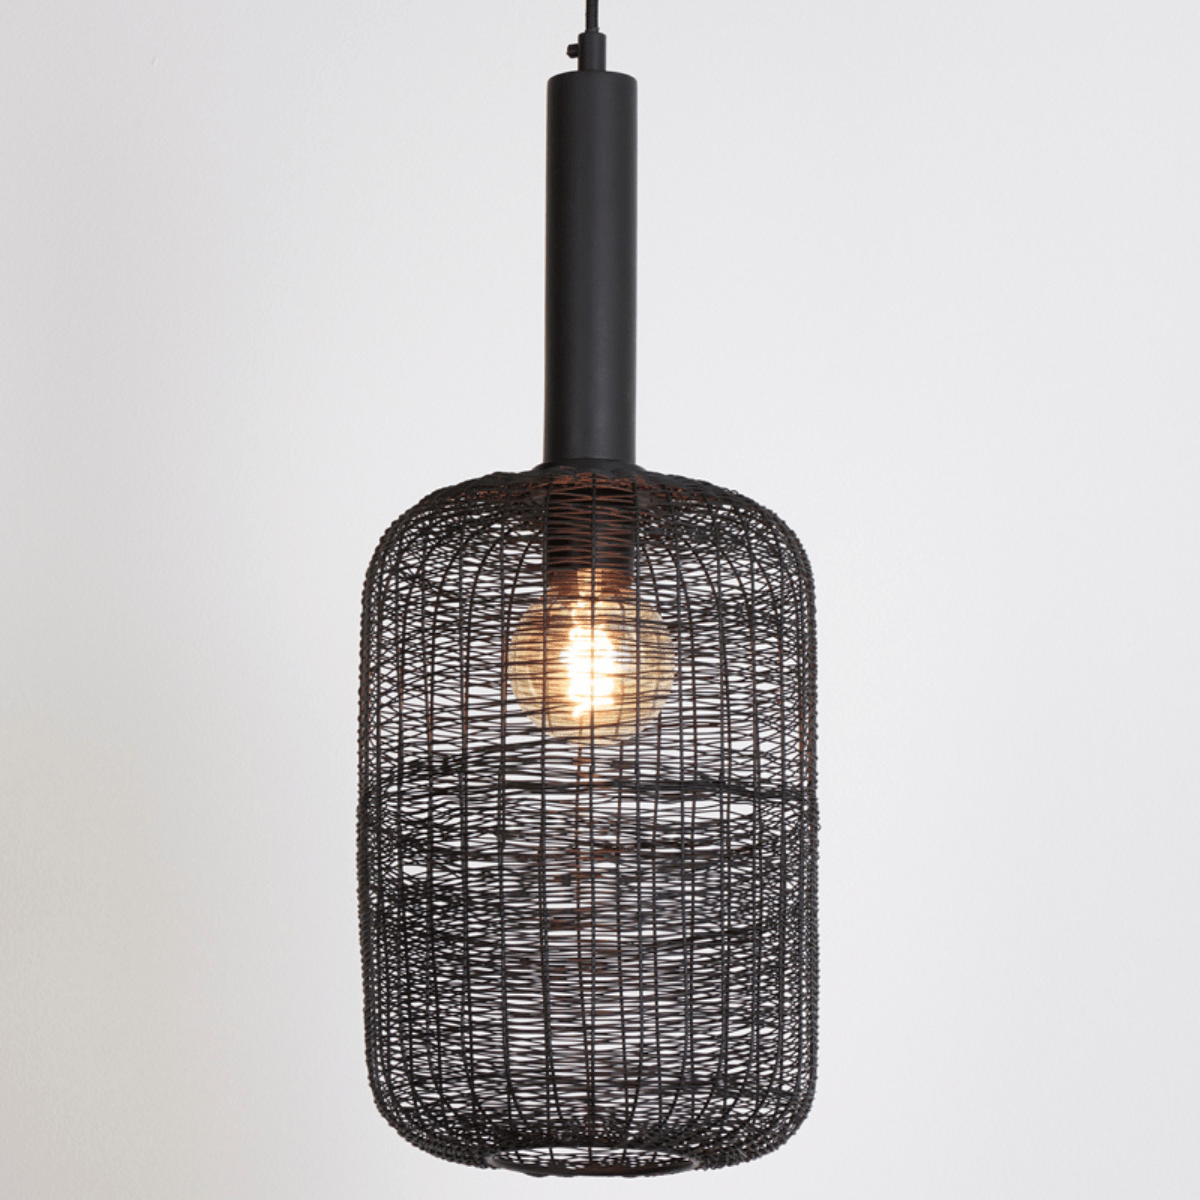 lekkage Ontrouw Beschikbaar Lekang hanglamp Ø22x55 cm mat zwart van het woonmerk Light&Living